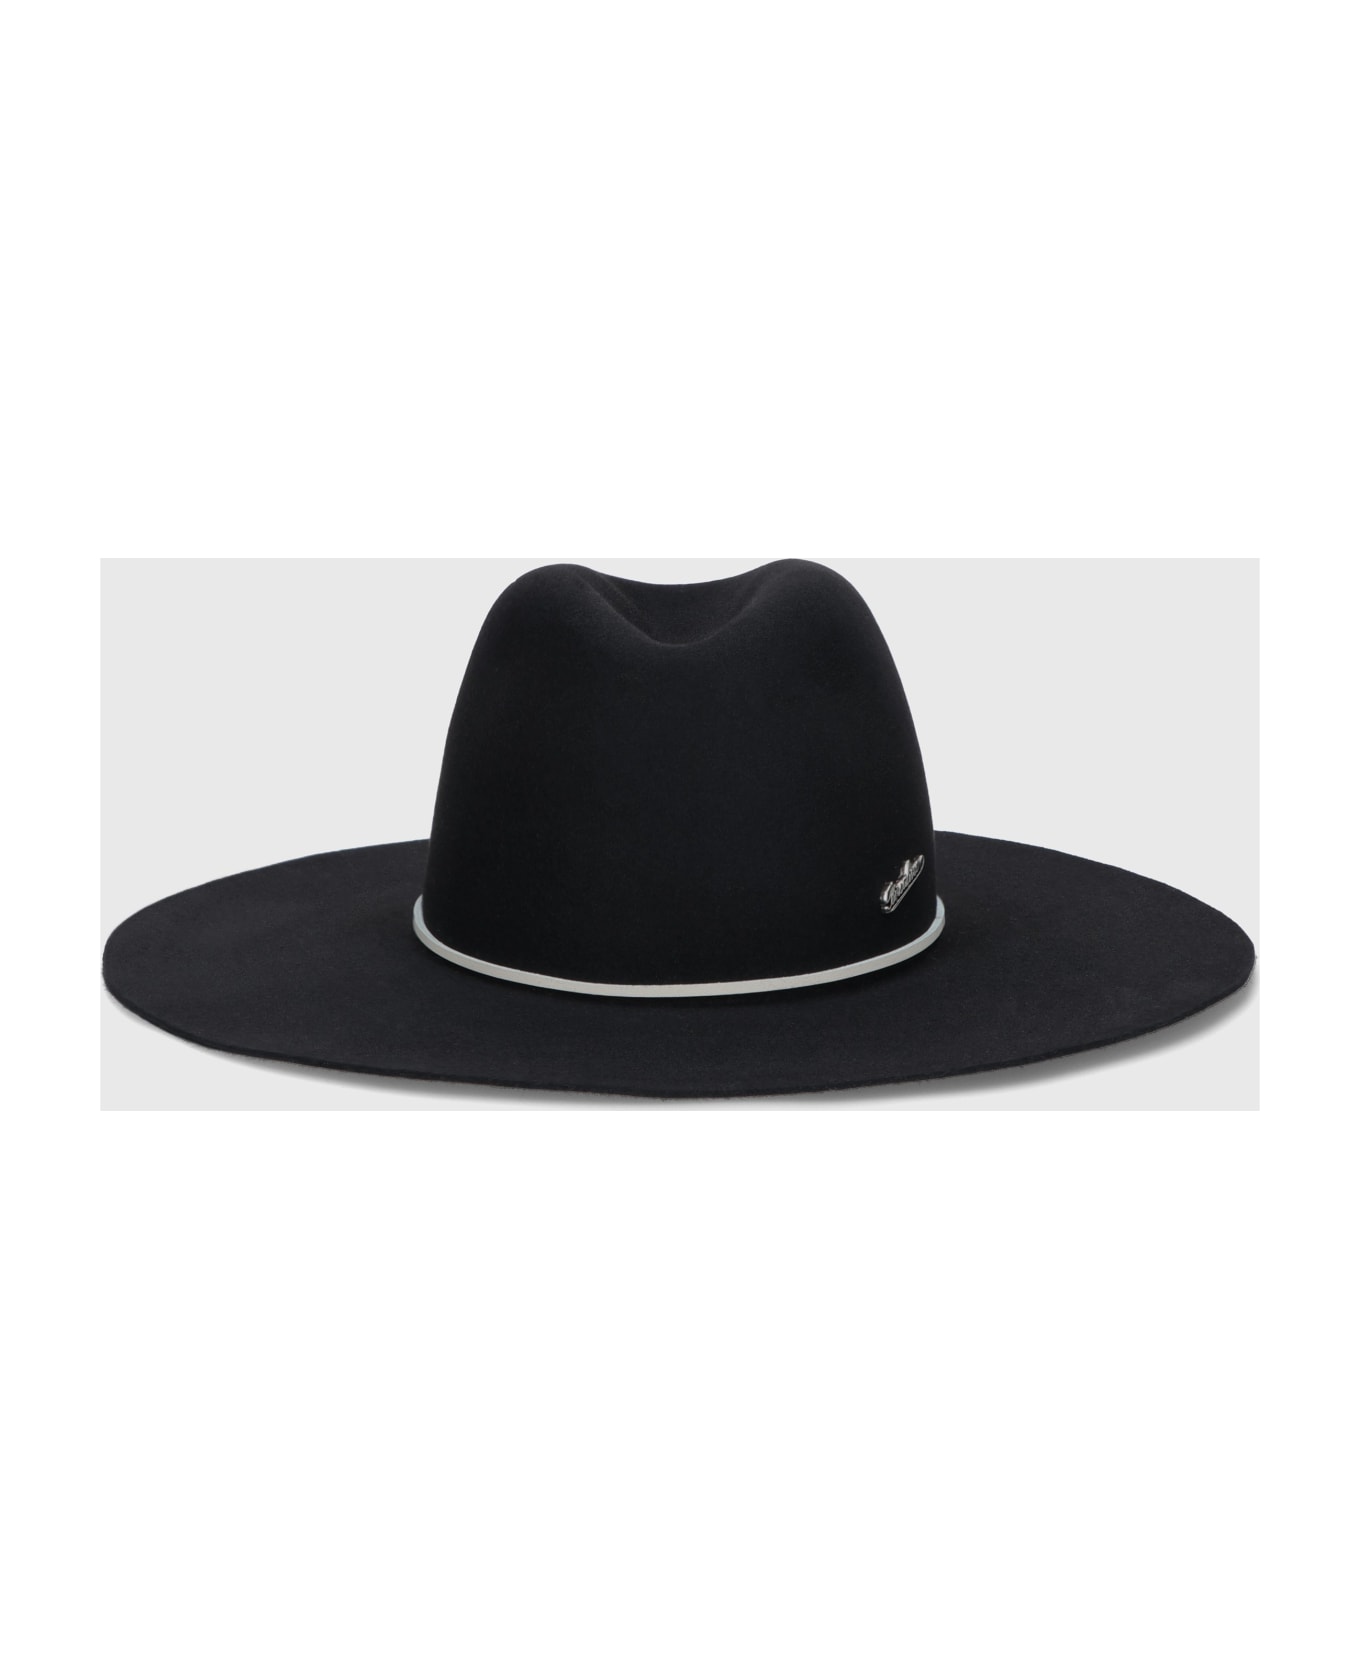 Borsalino Heath Alessandria Brushed Felt Leather Hatband - BLACK